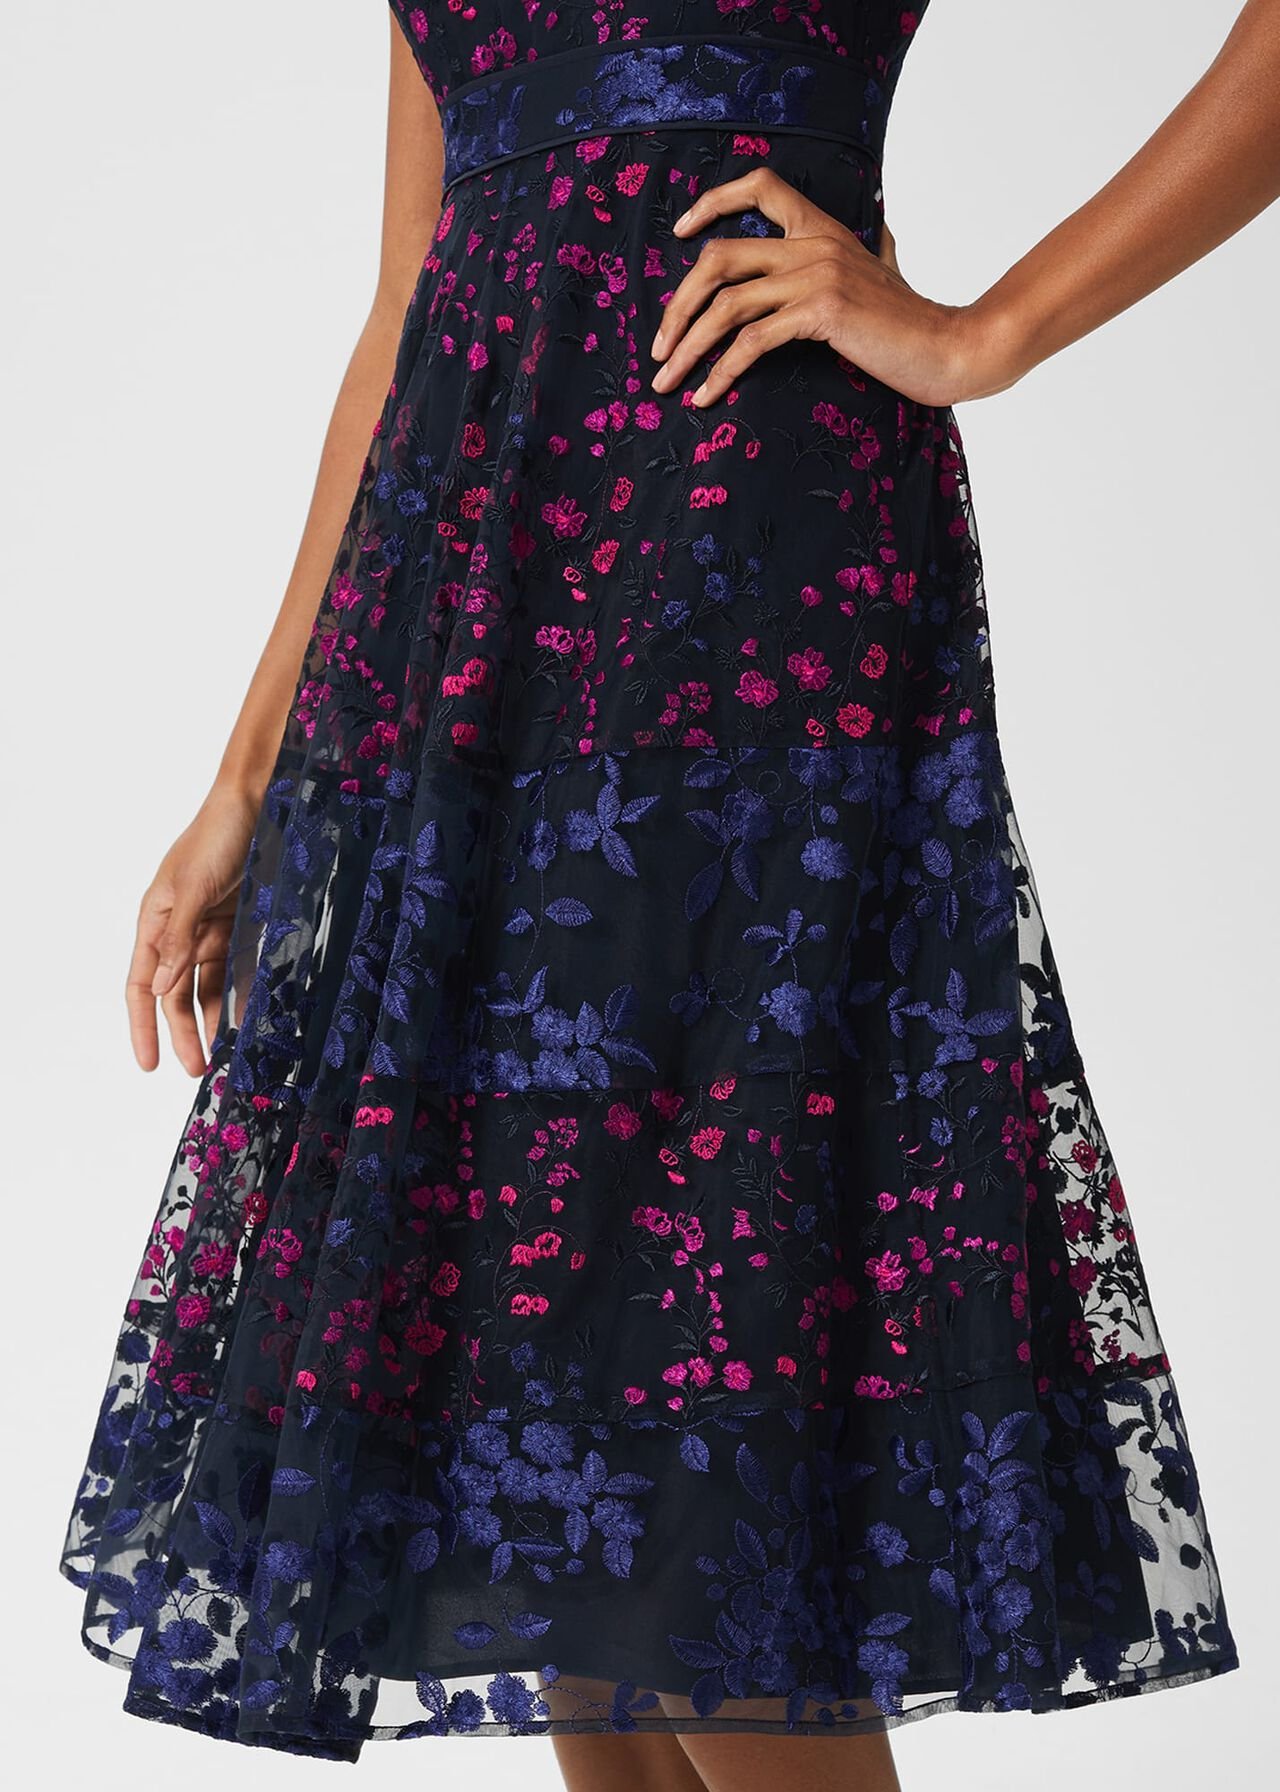 Kasia Floral Embroidered Dress, Navy Multi, hi-res